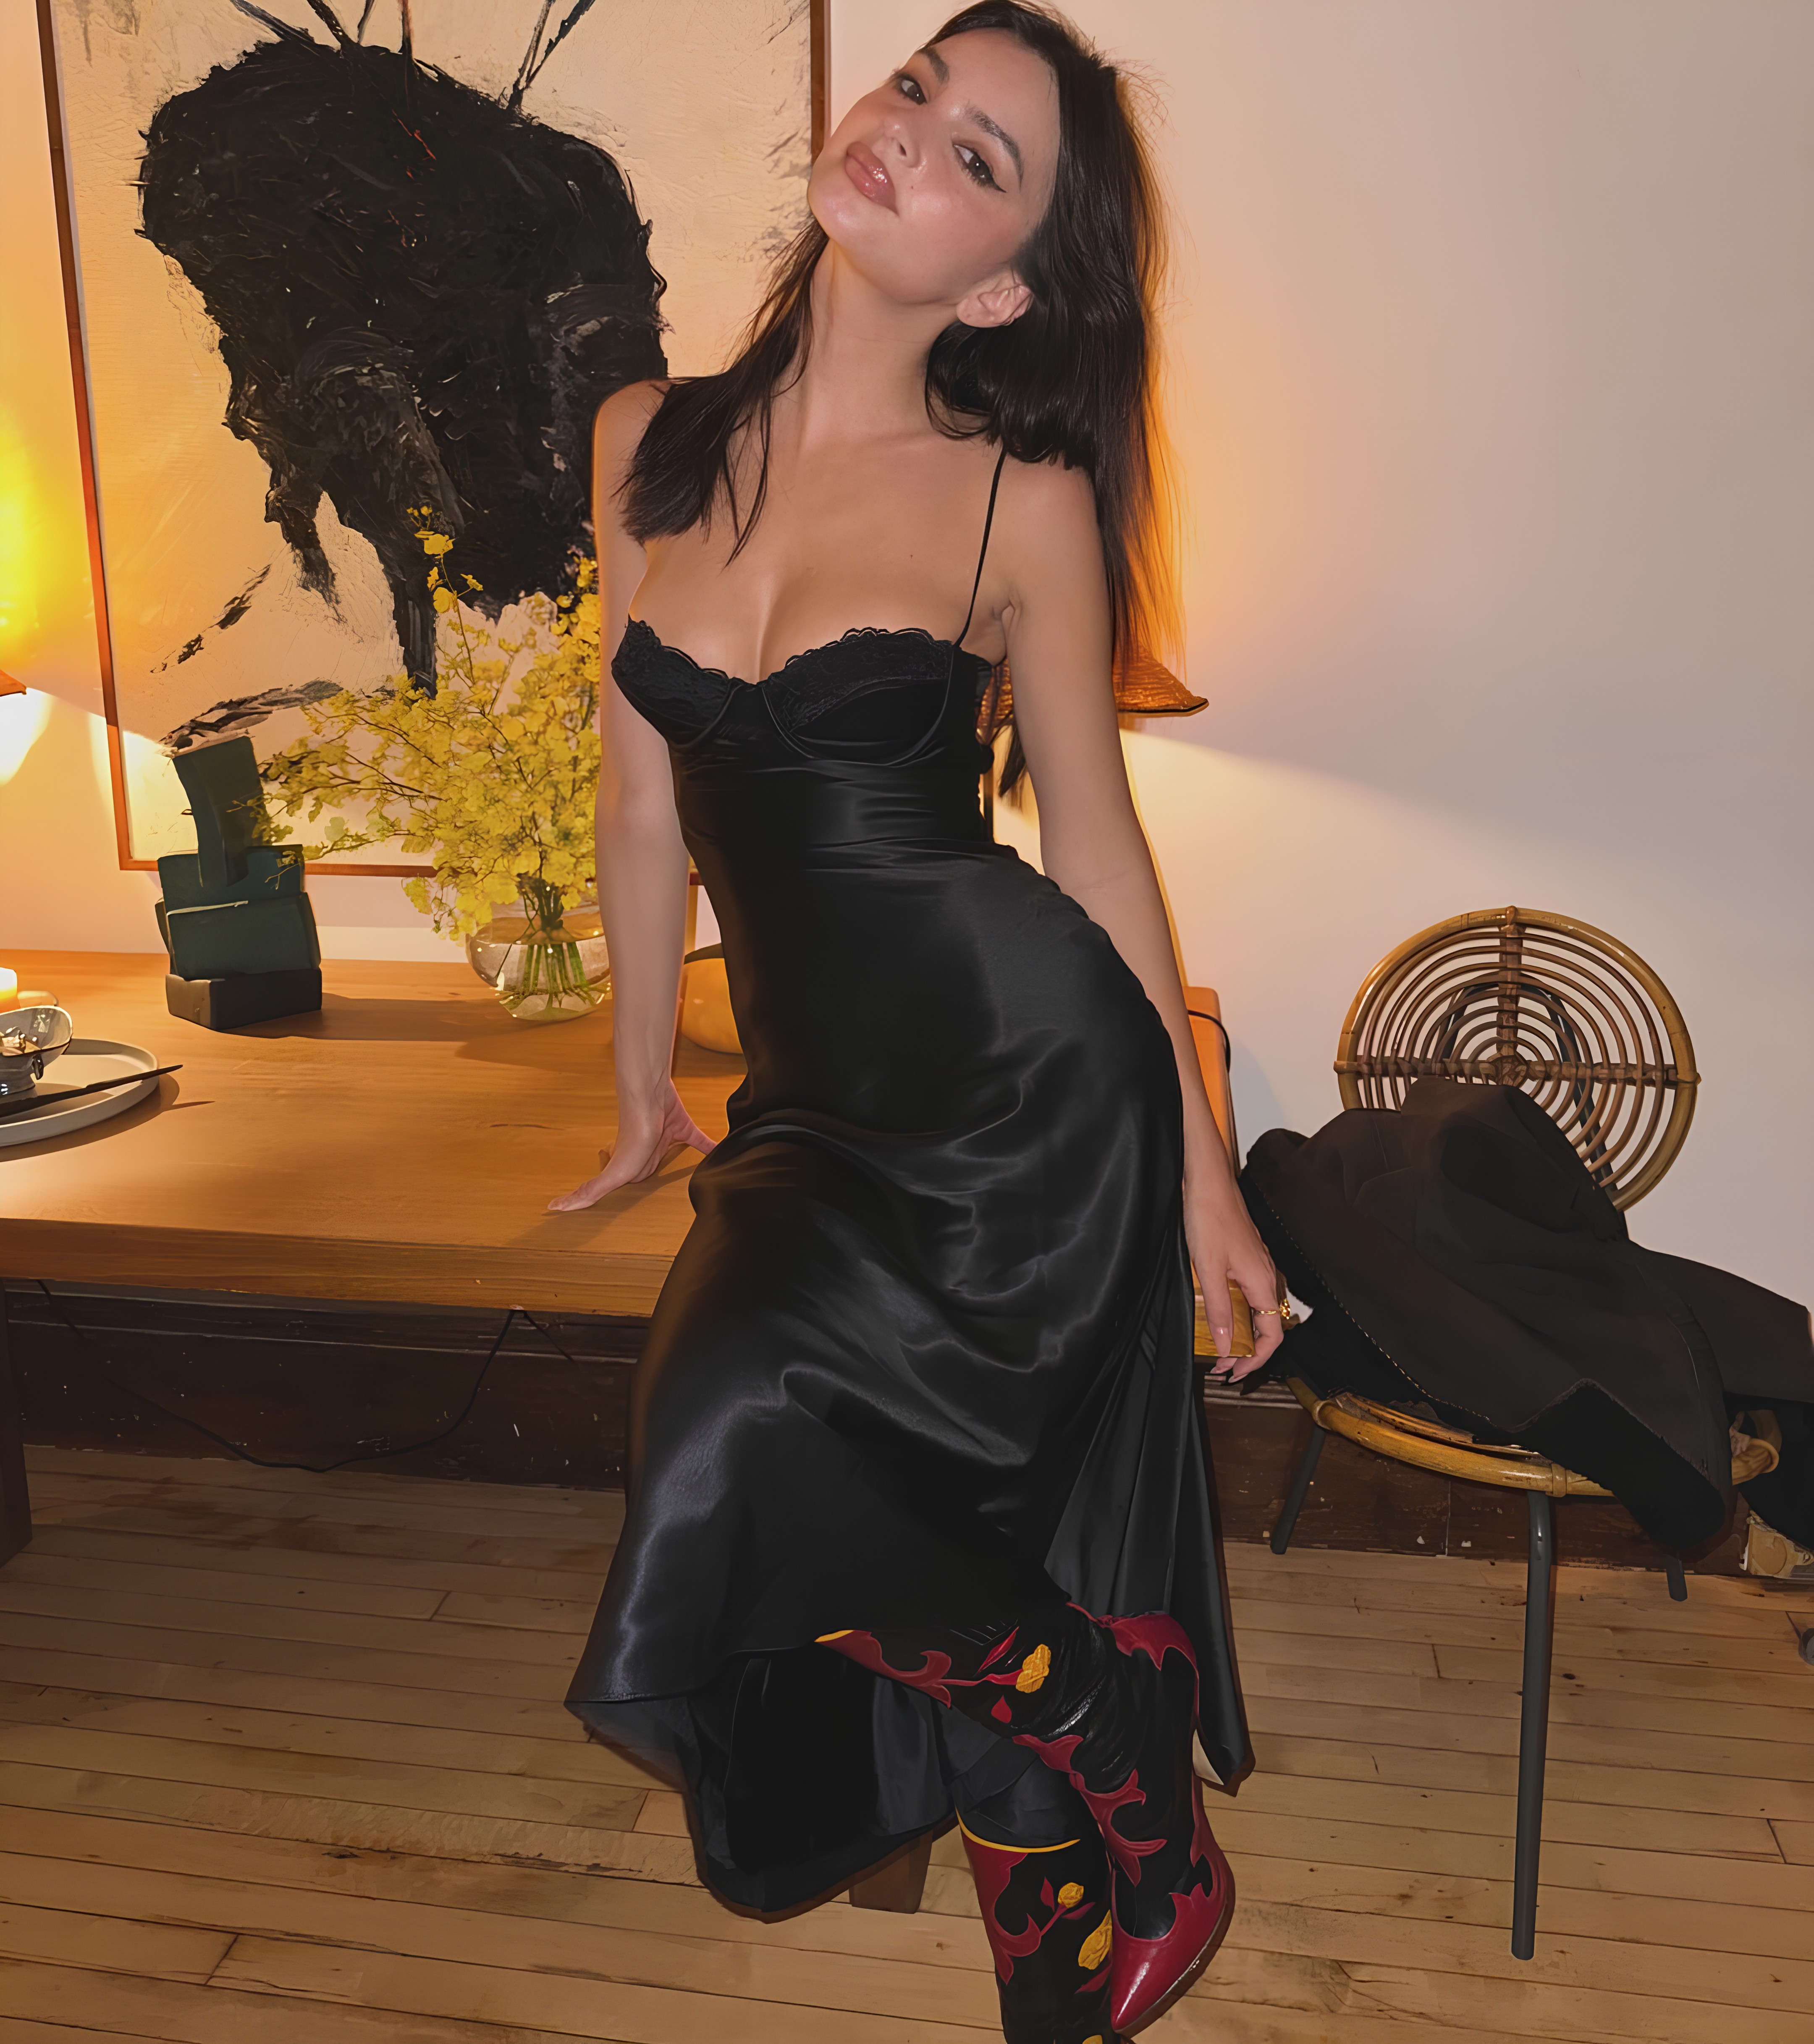 Photos n°1 : Emily Ratajkowski’s Holiday Dress is Revealing!